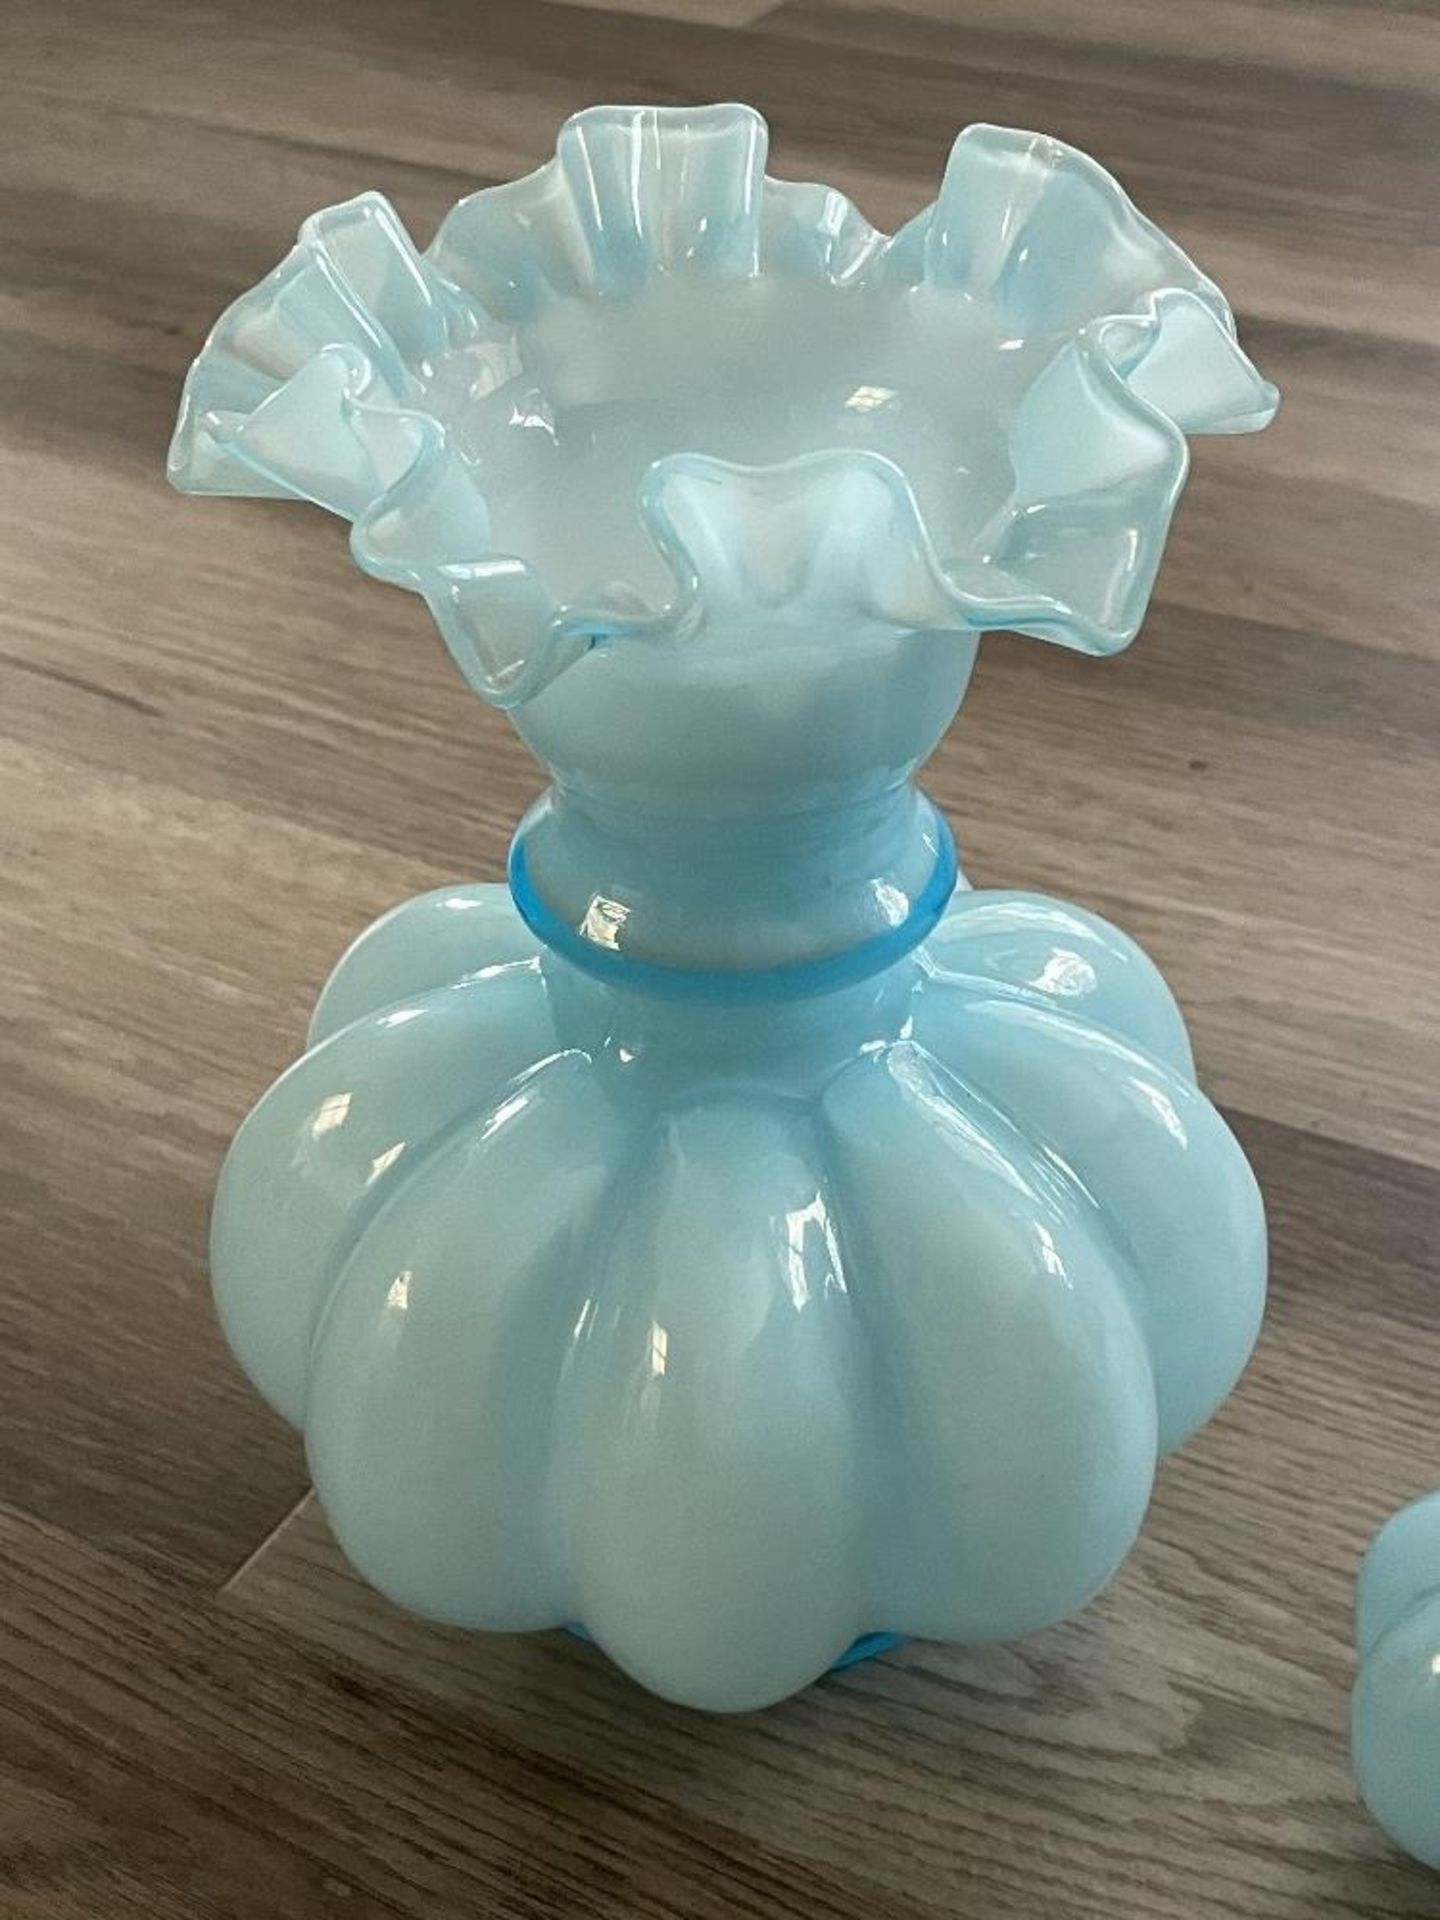 2 Depression Era Blue Vases, Tallest is 12" Tall - Image 5 of 6